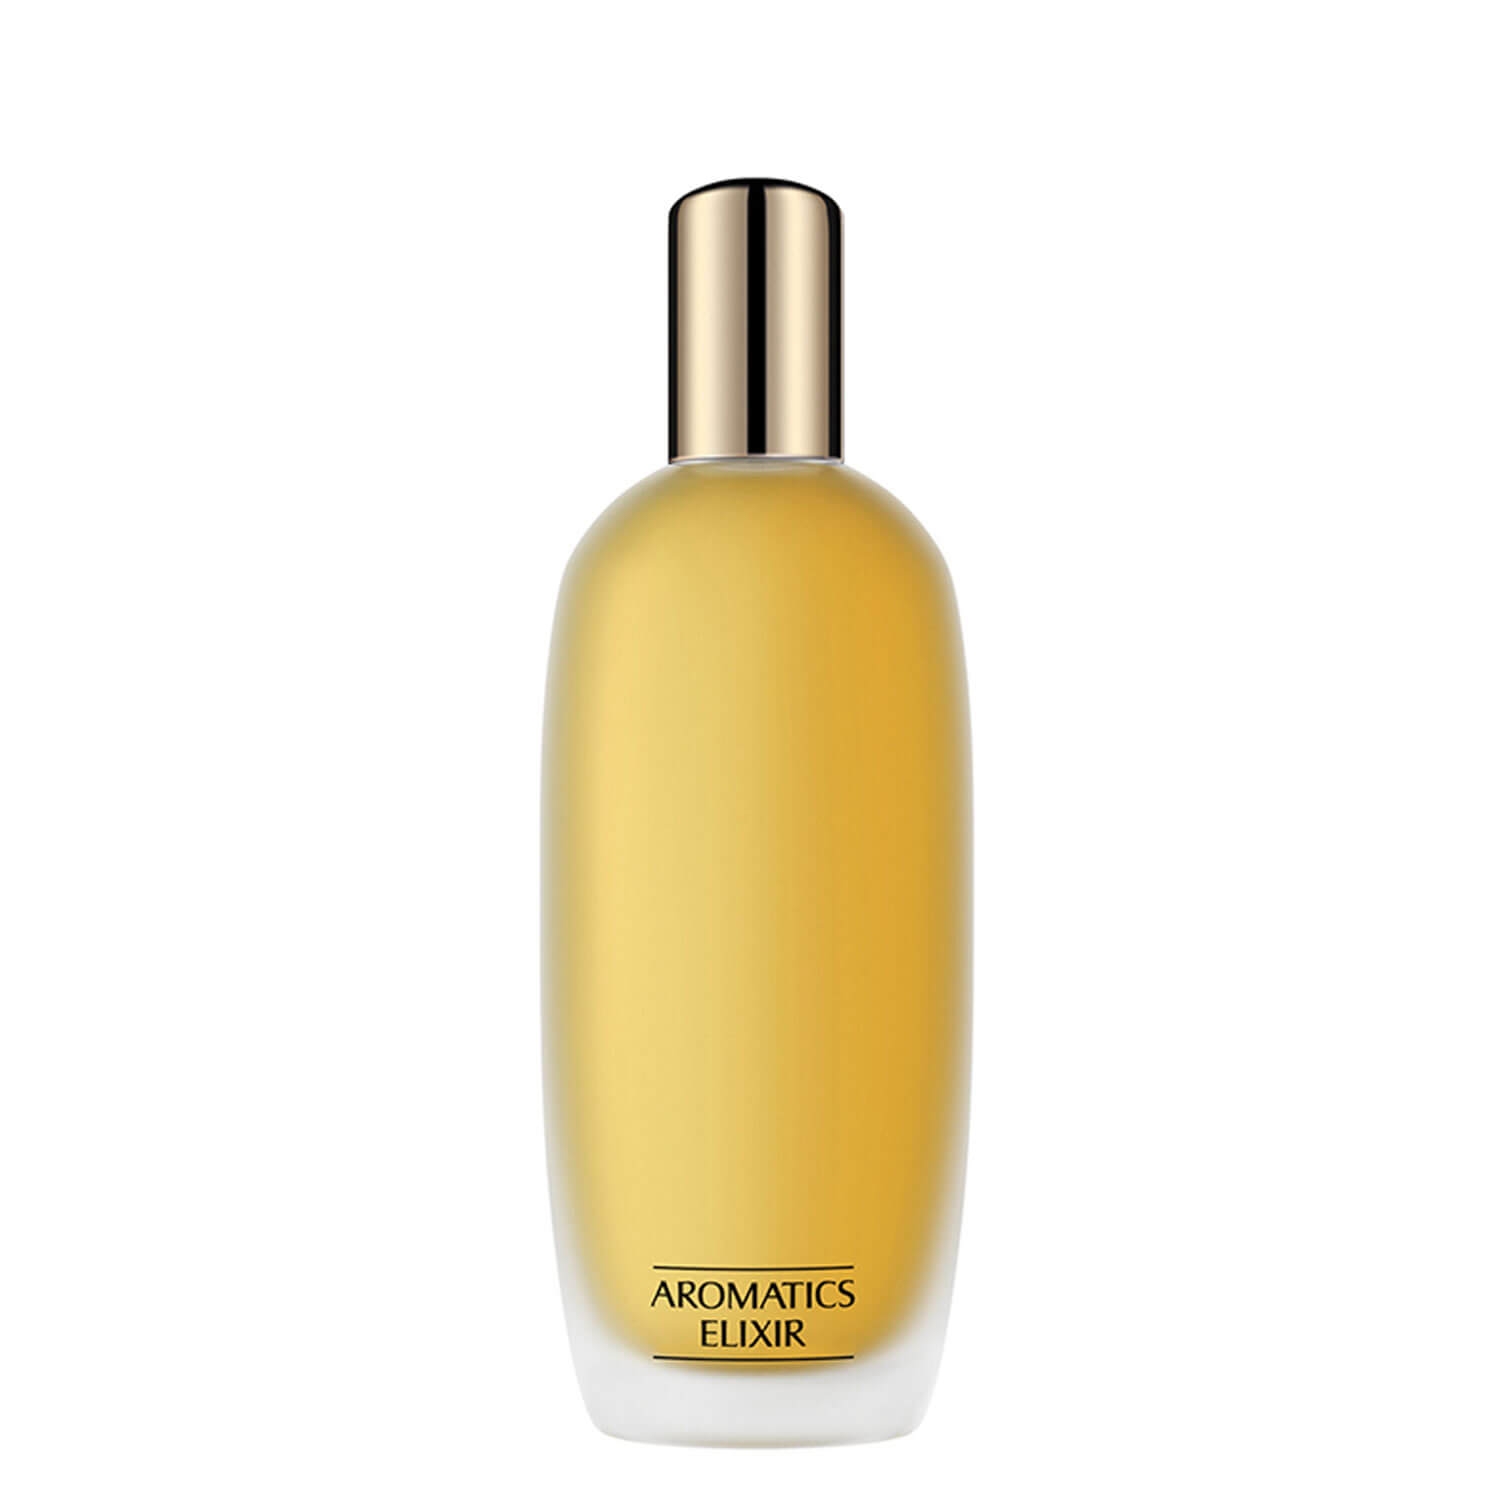 Produktbild von Aromatics - Elixir Perfume Spray